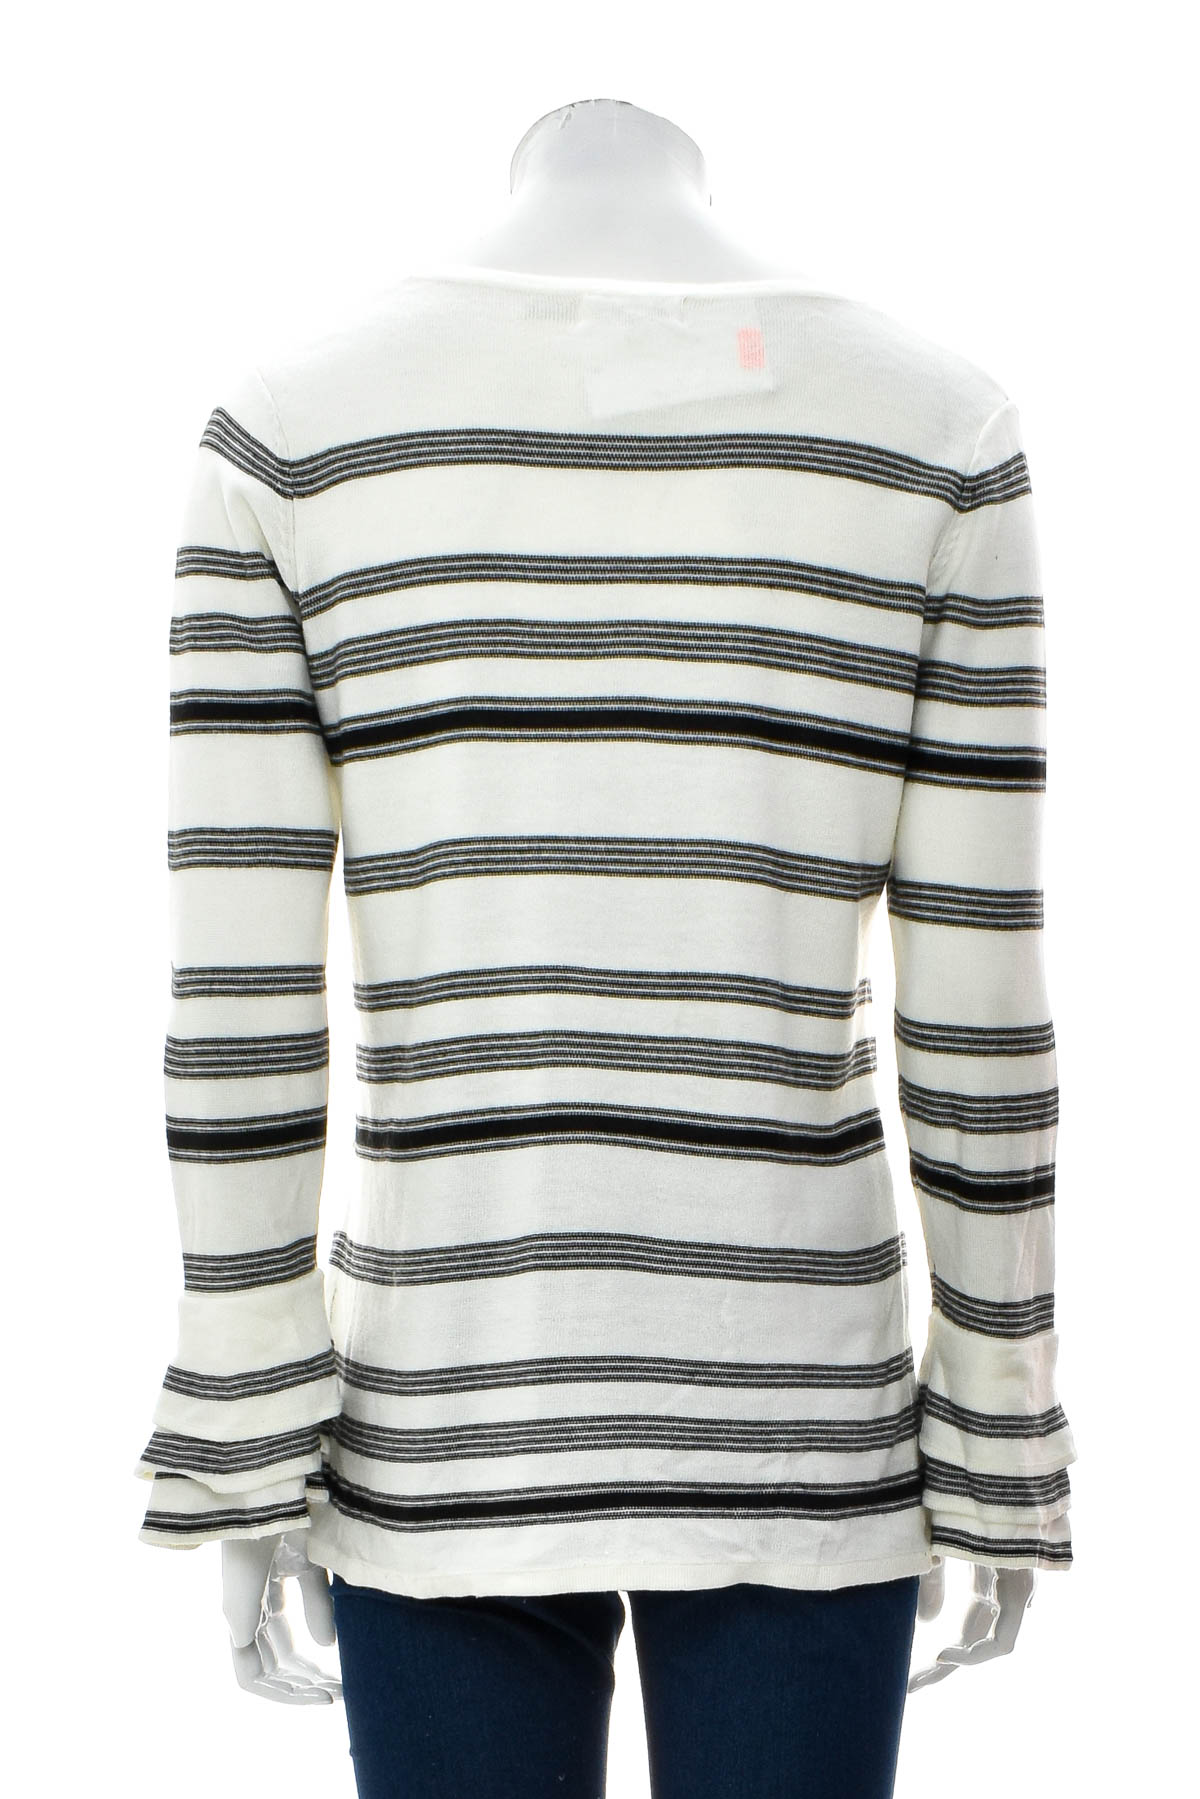 Women's sweater - Calvin Klein - 1